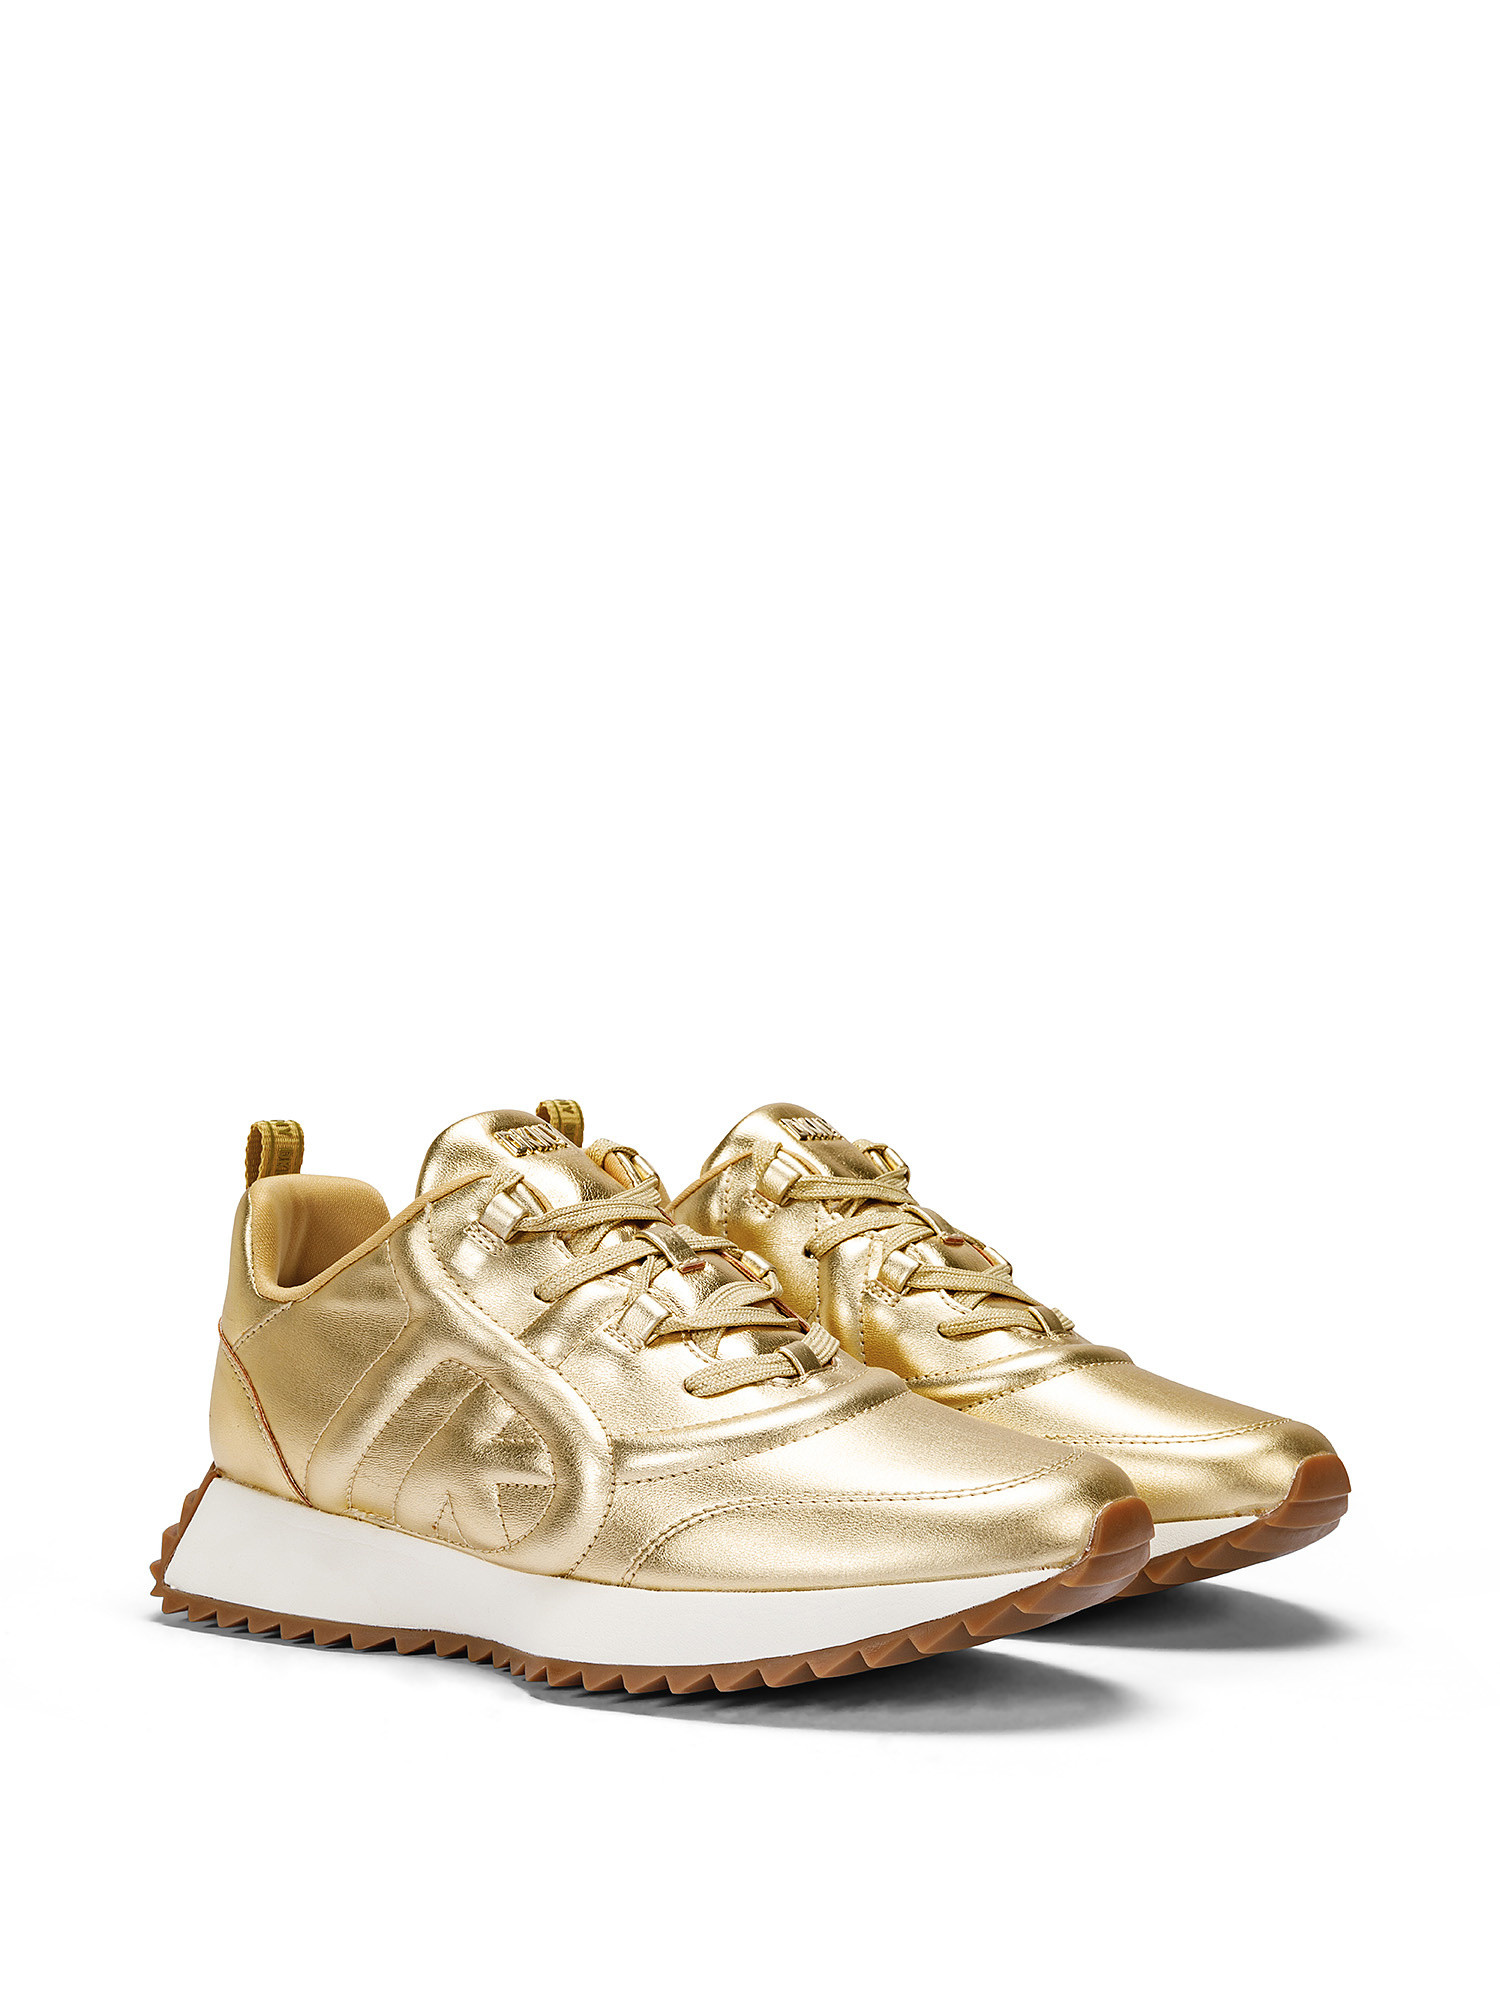 DKNY - Sneakers NIX, Oro, large image number 1